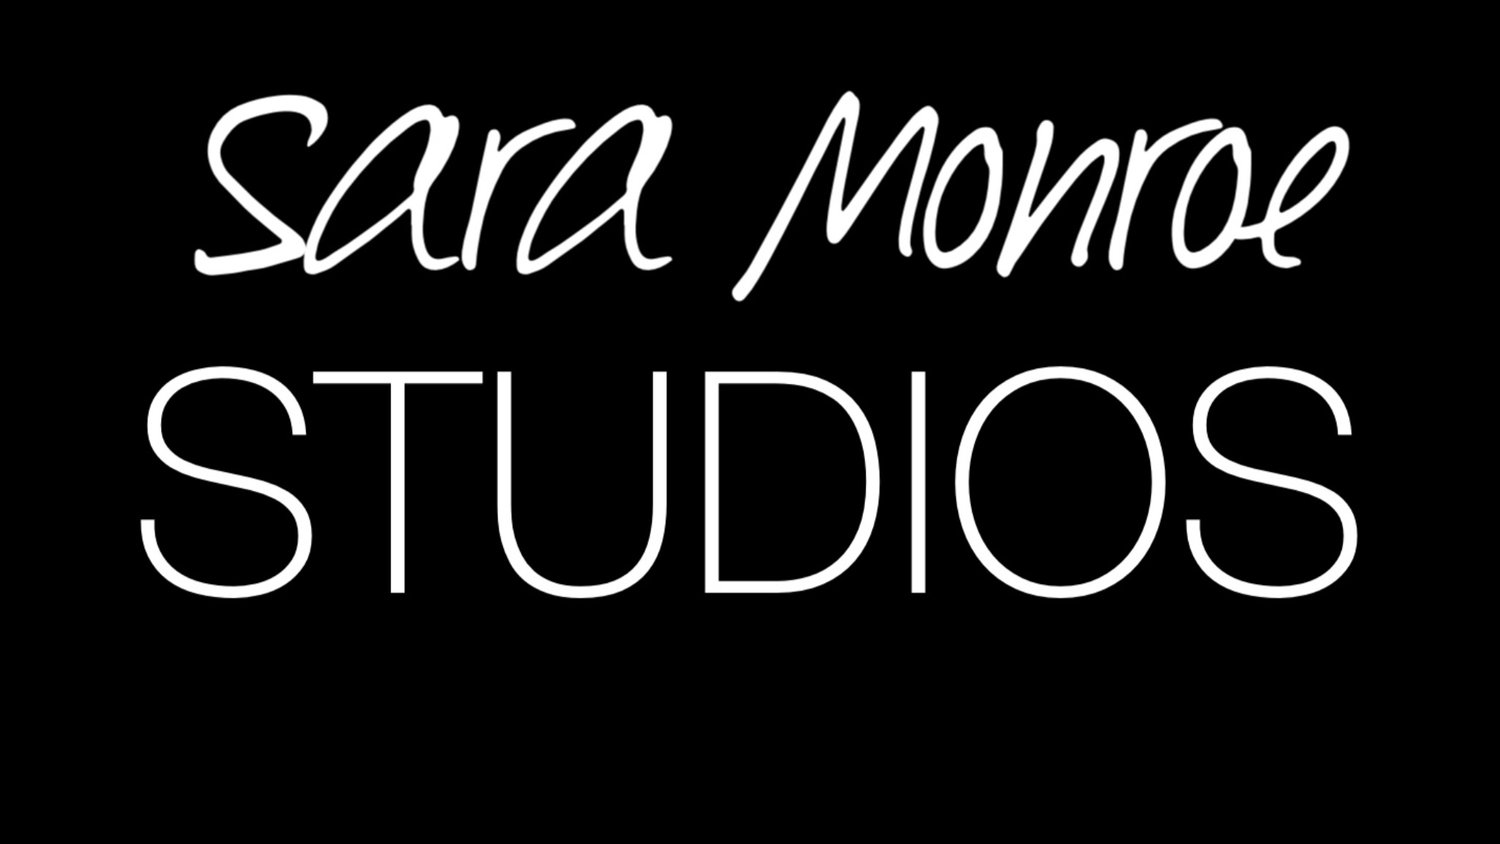 Sara Monroe Studios